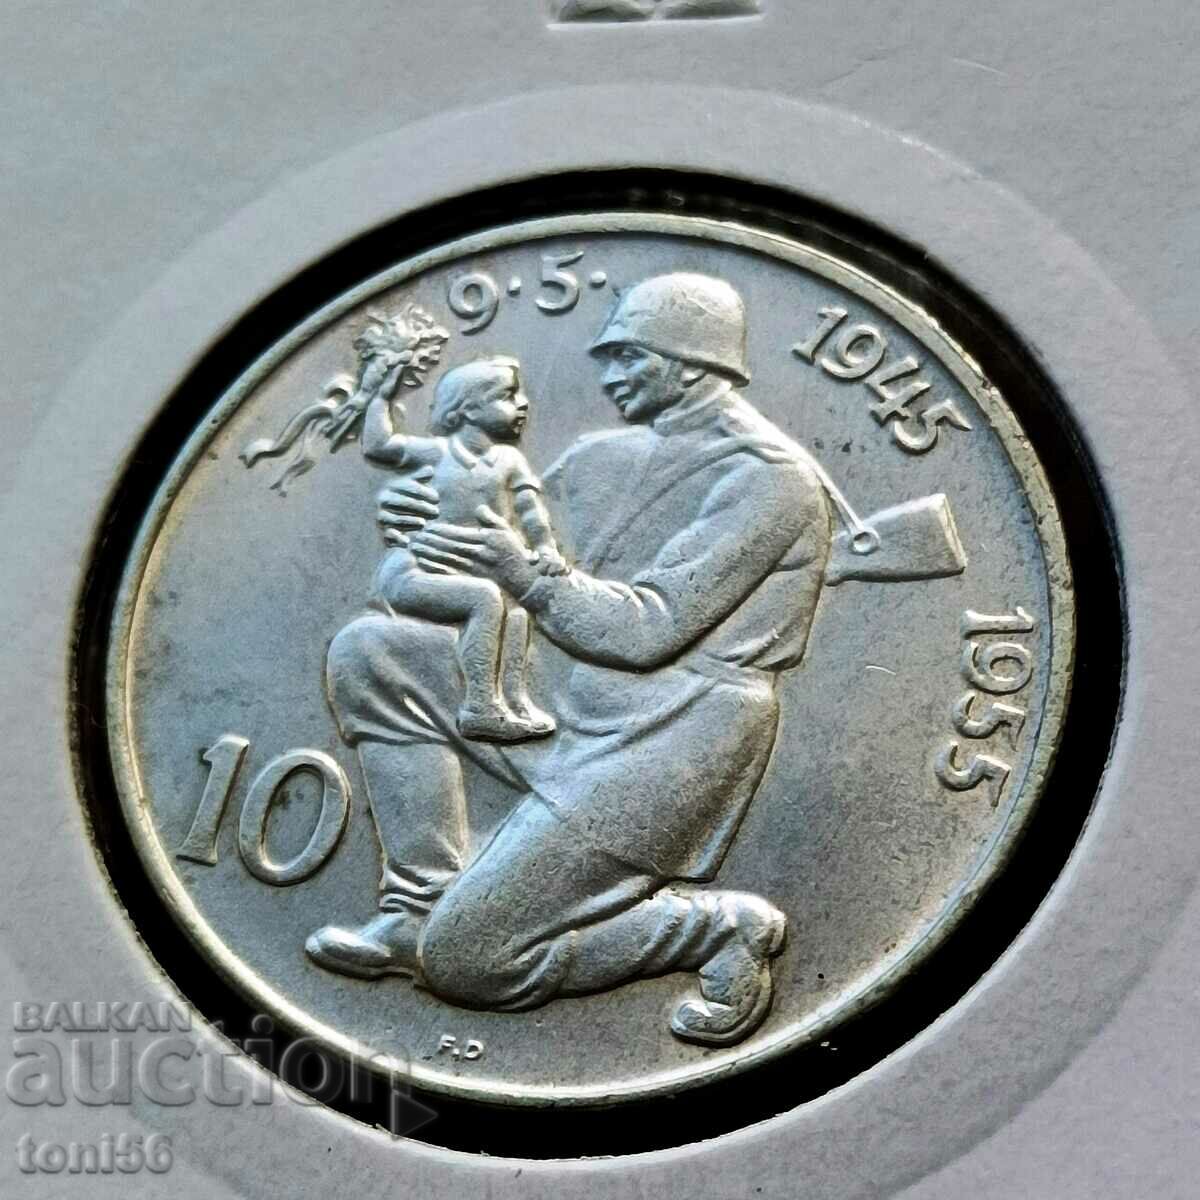 Cehoslovacia 10 coroane 1955 UNC - Argint